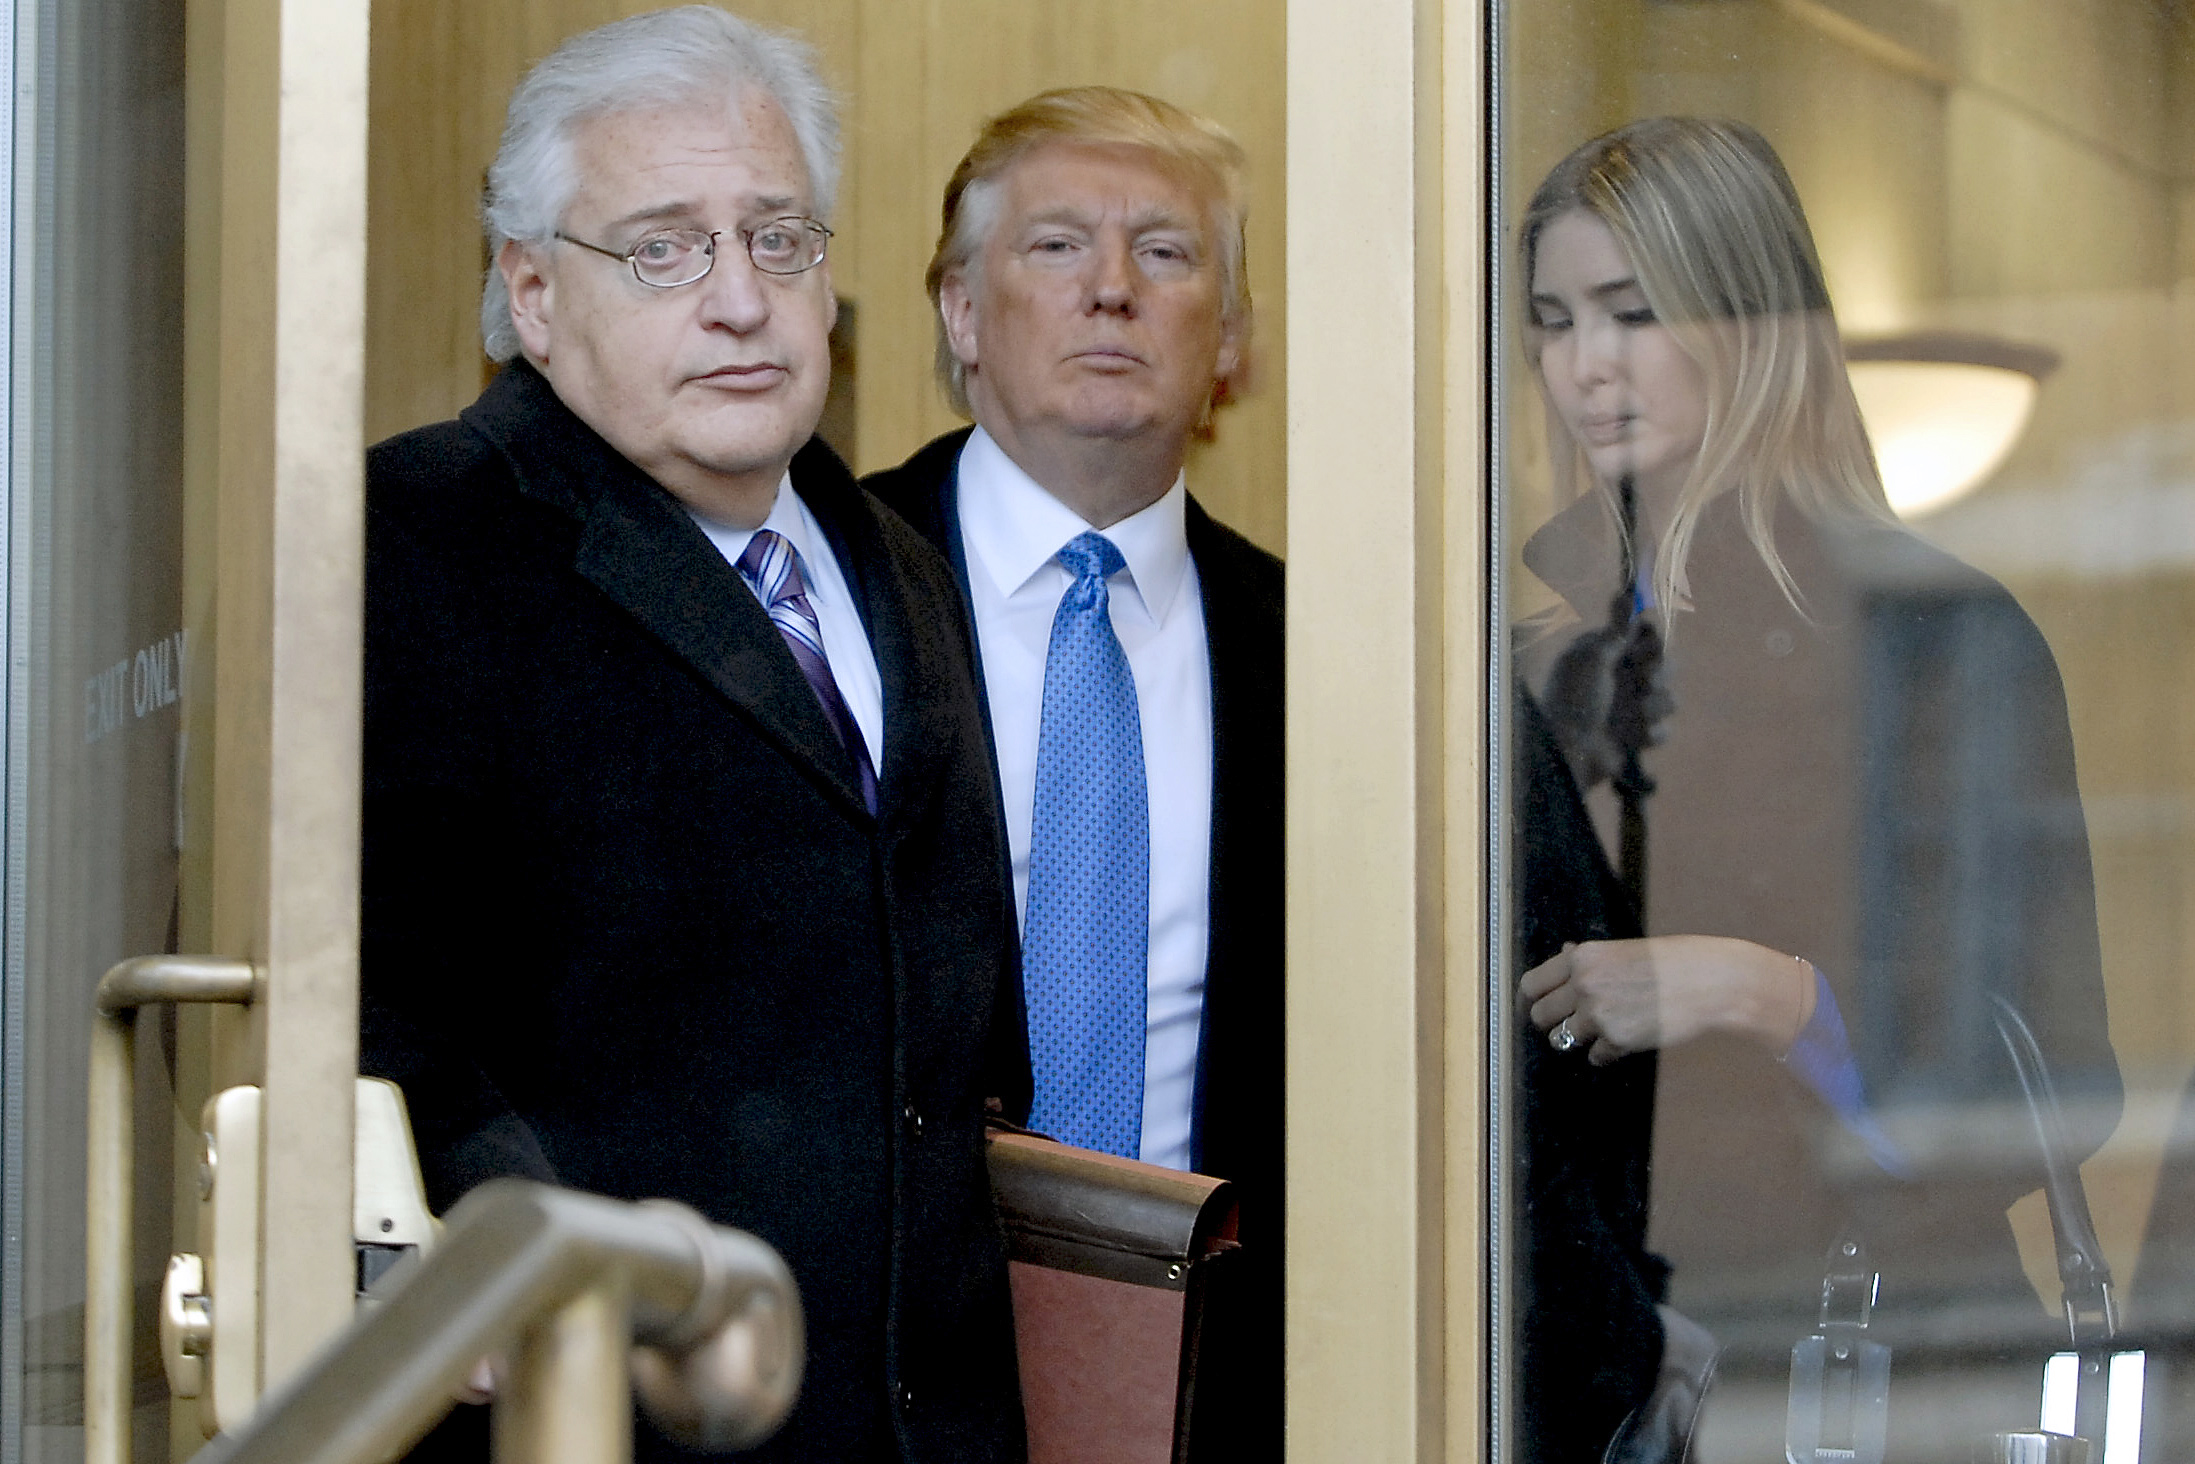 PHOTO: Billionaire real estate developer Donald J. Trump, center, his daughter Ivanka Trump, right, and attorney David Friedman exit U.S. Bankruptcy Court in Camden, New Jersey, Feb. 25, 2010. 